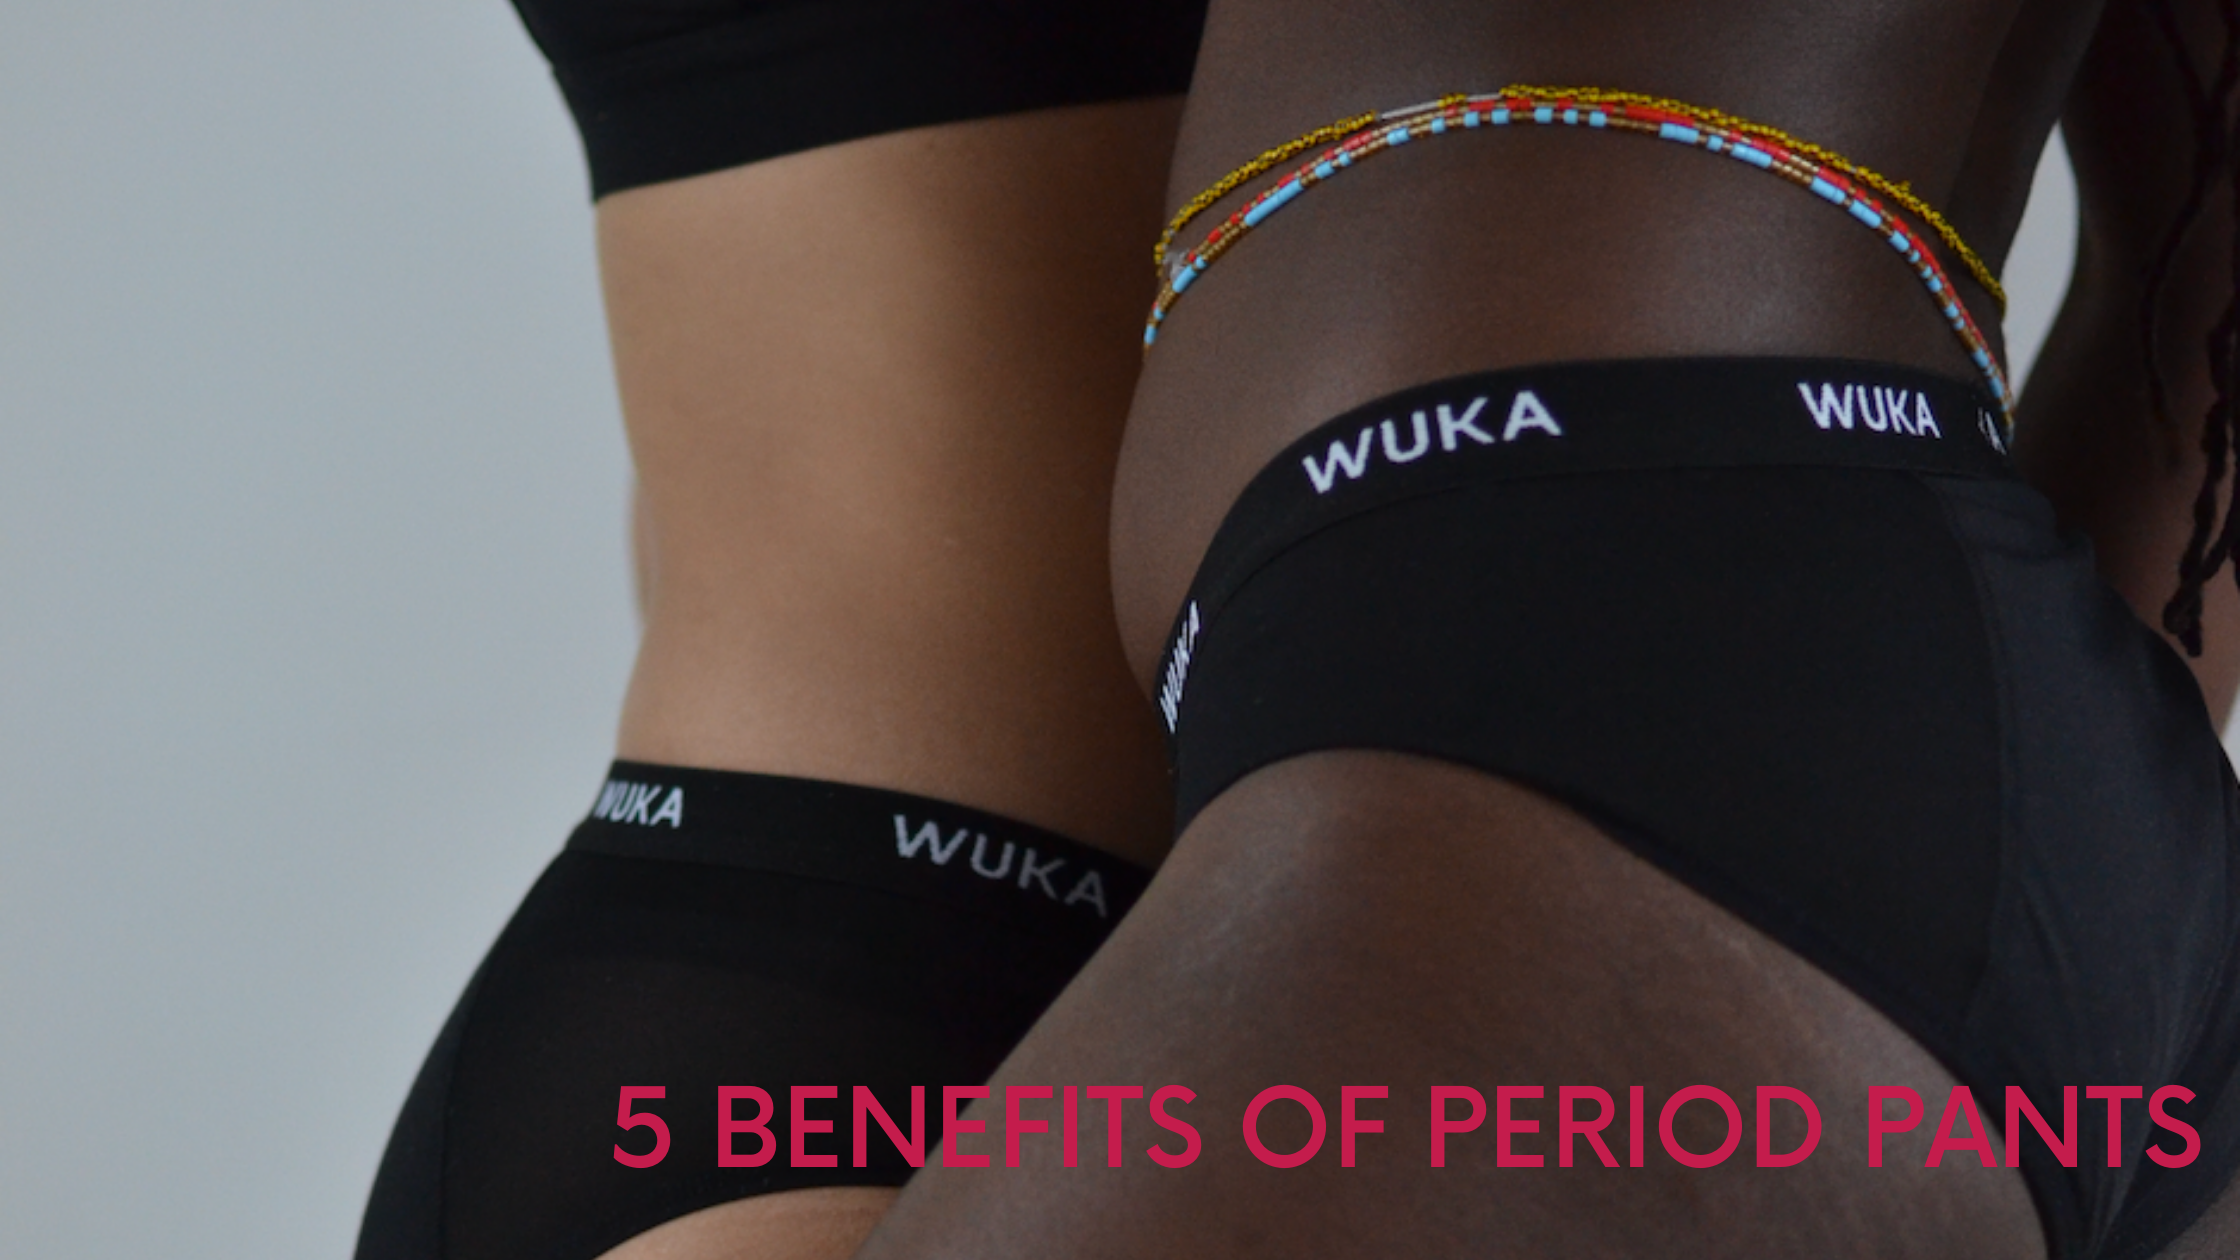 BENEFITS OF WUKA PERIOD PANTS